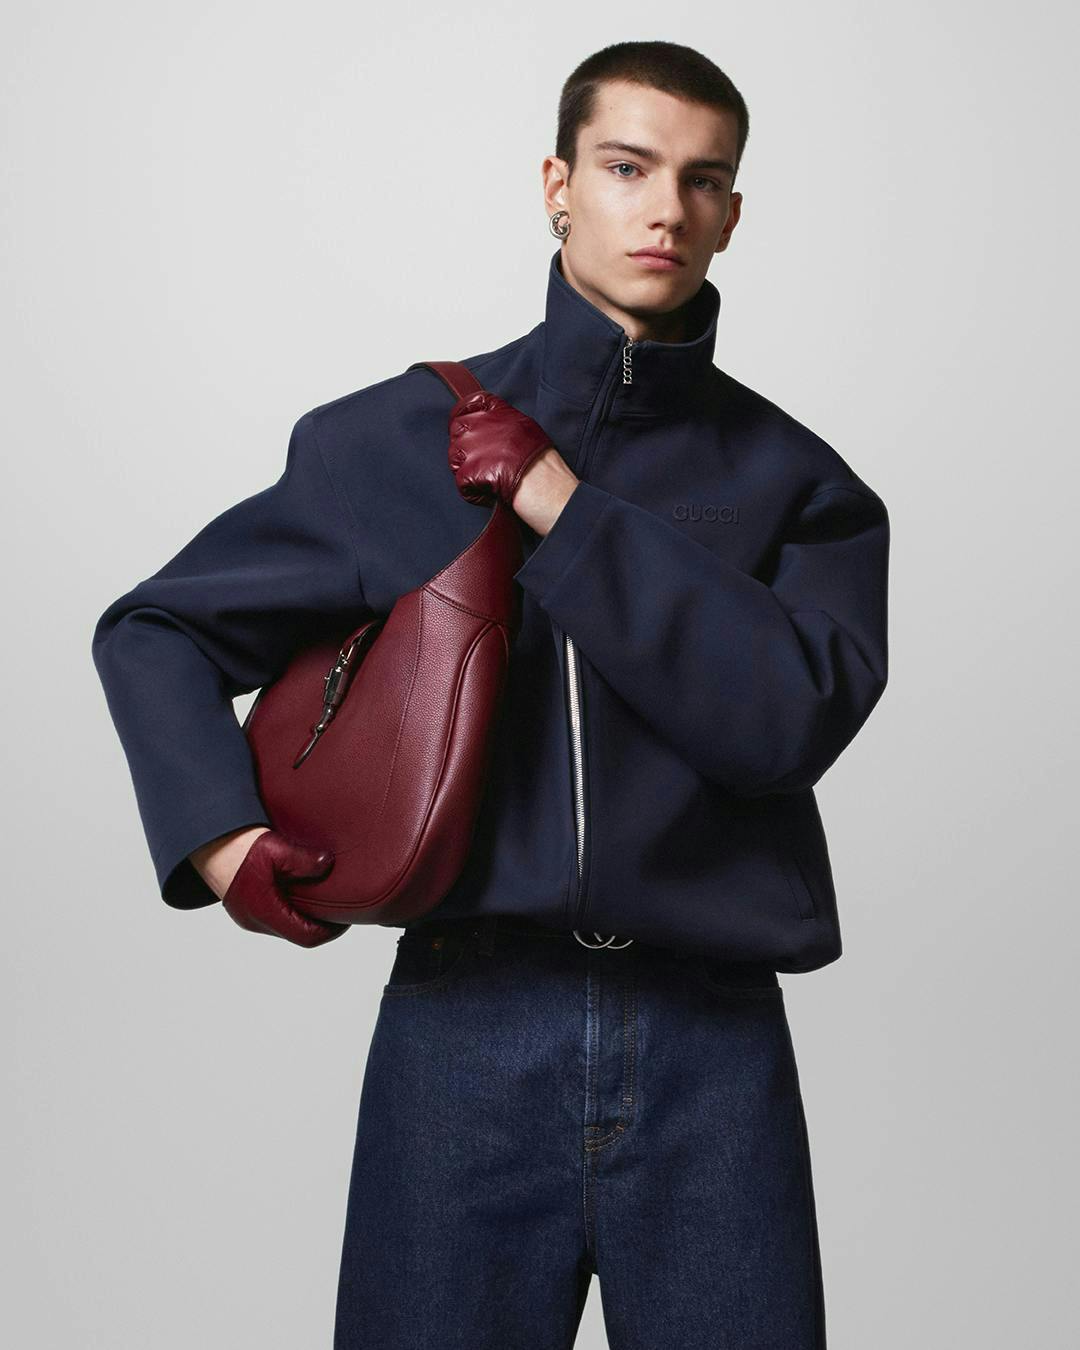 coat jacket blazer adult male man person handbag formal wear glove